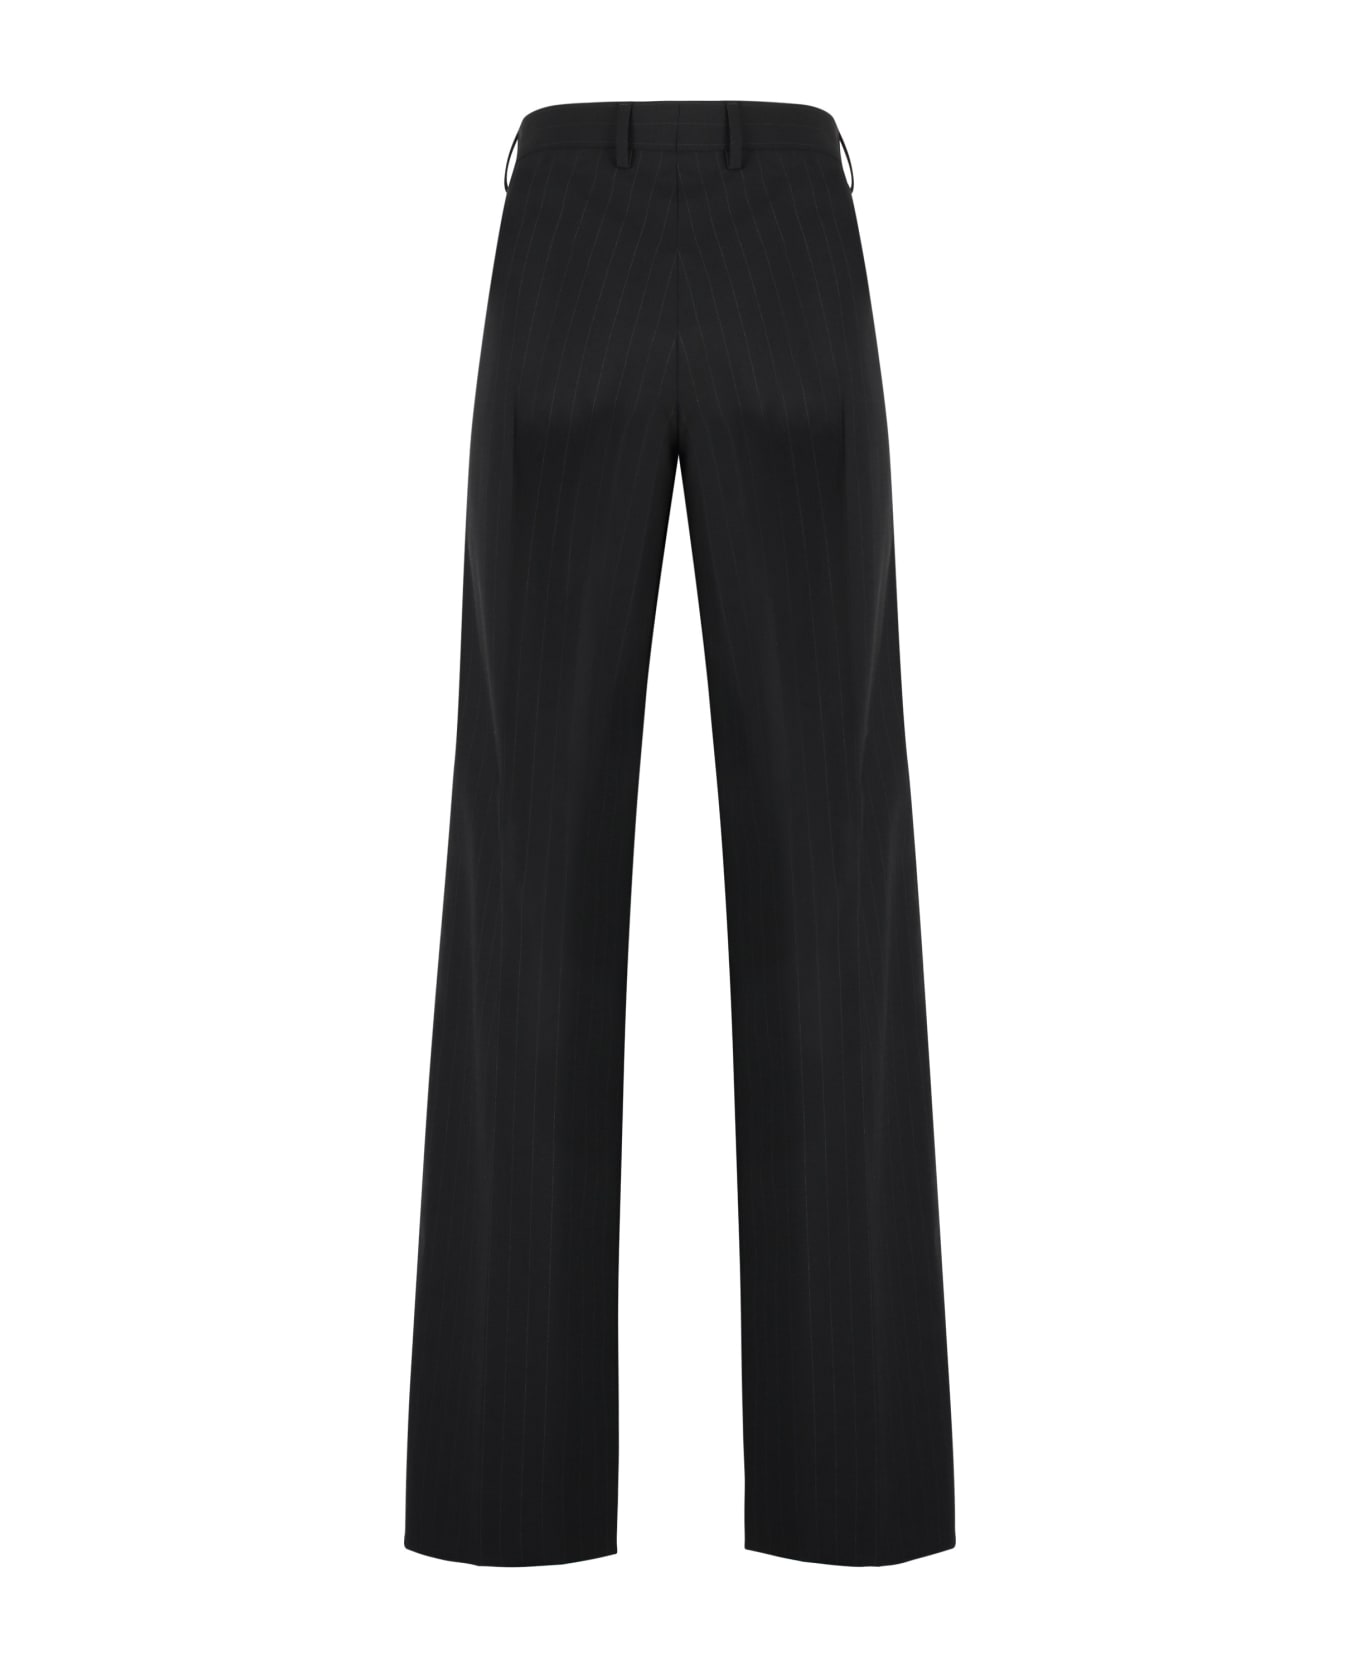 MM6 Maison Margiela Wool Blend Trousers - black